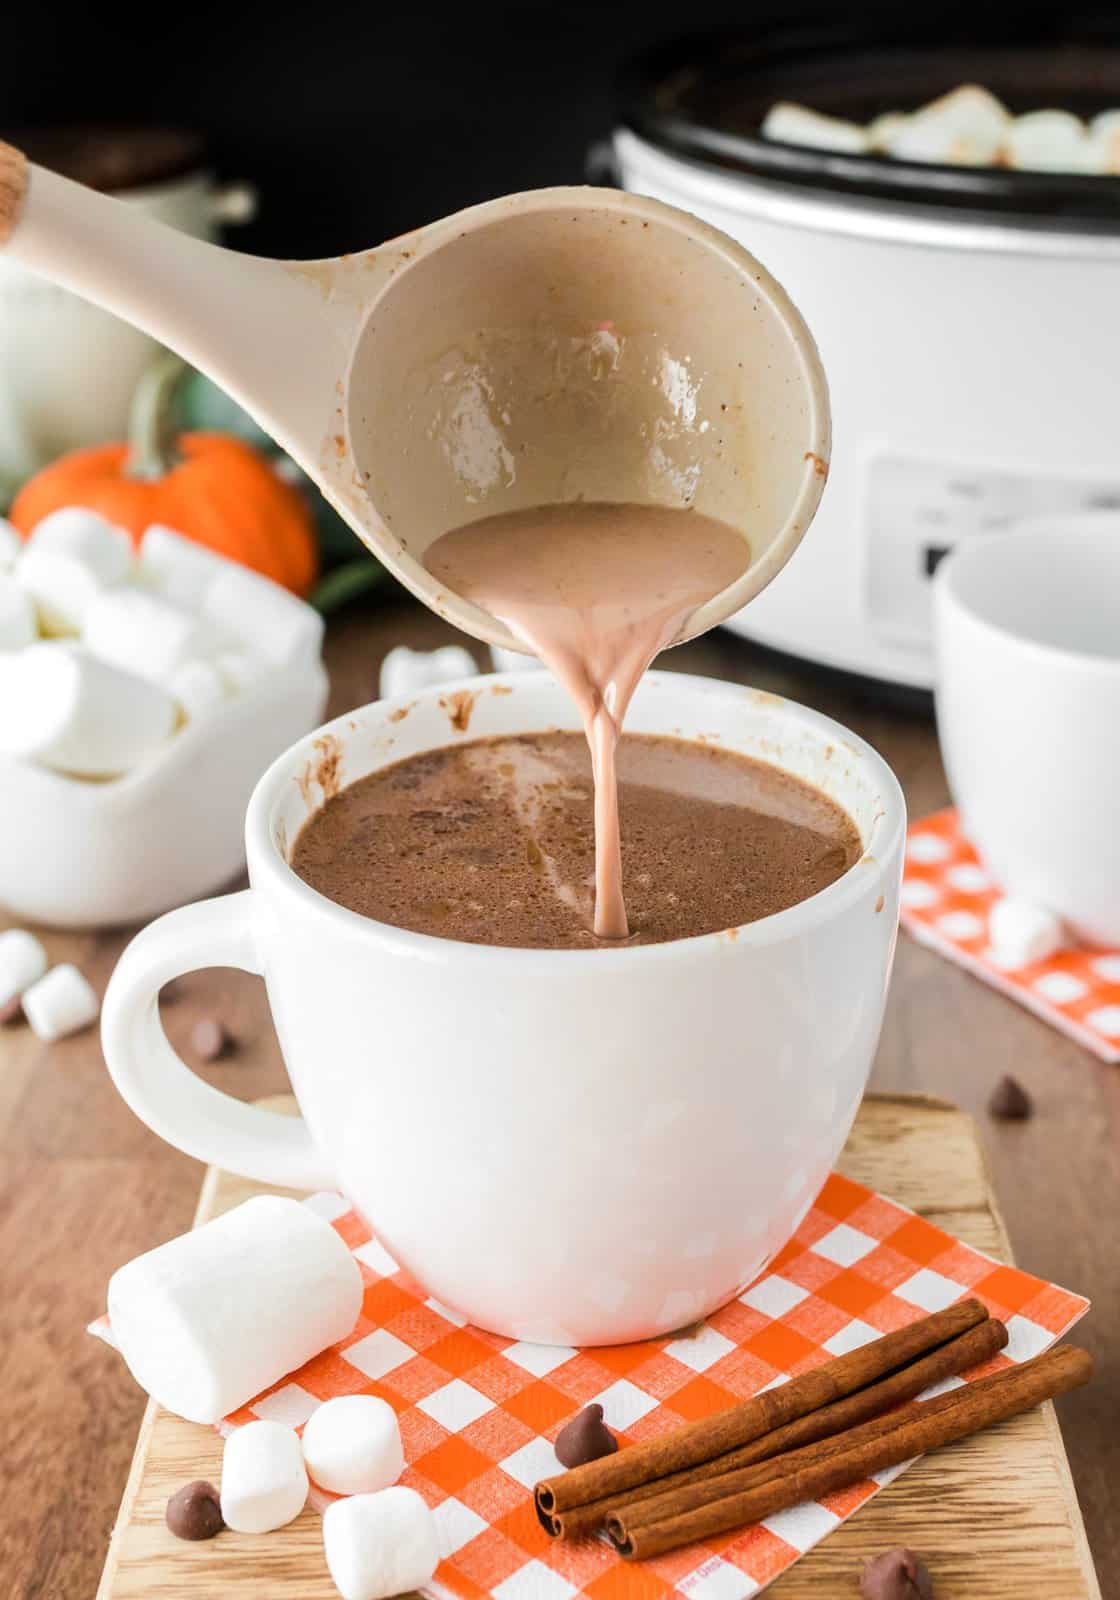 Ladle pouring hot chocolate into mug.